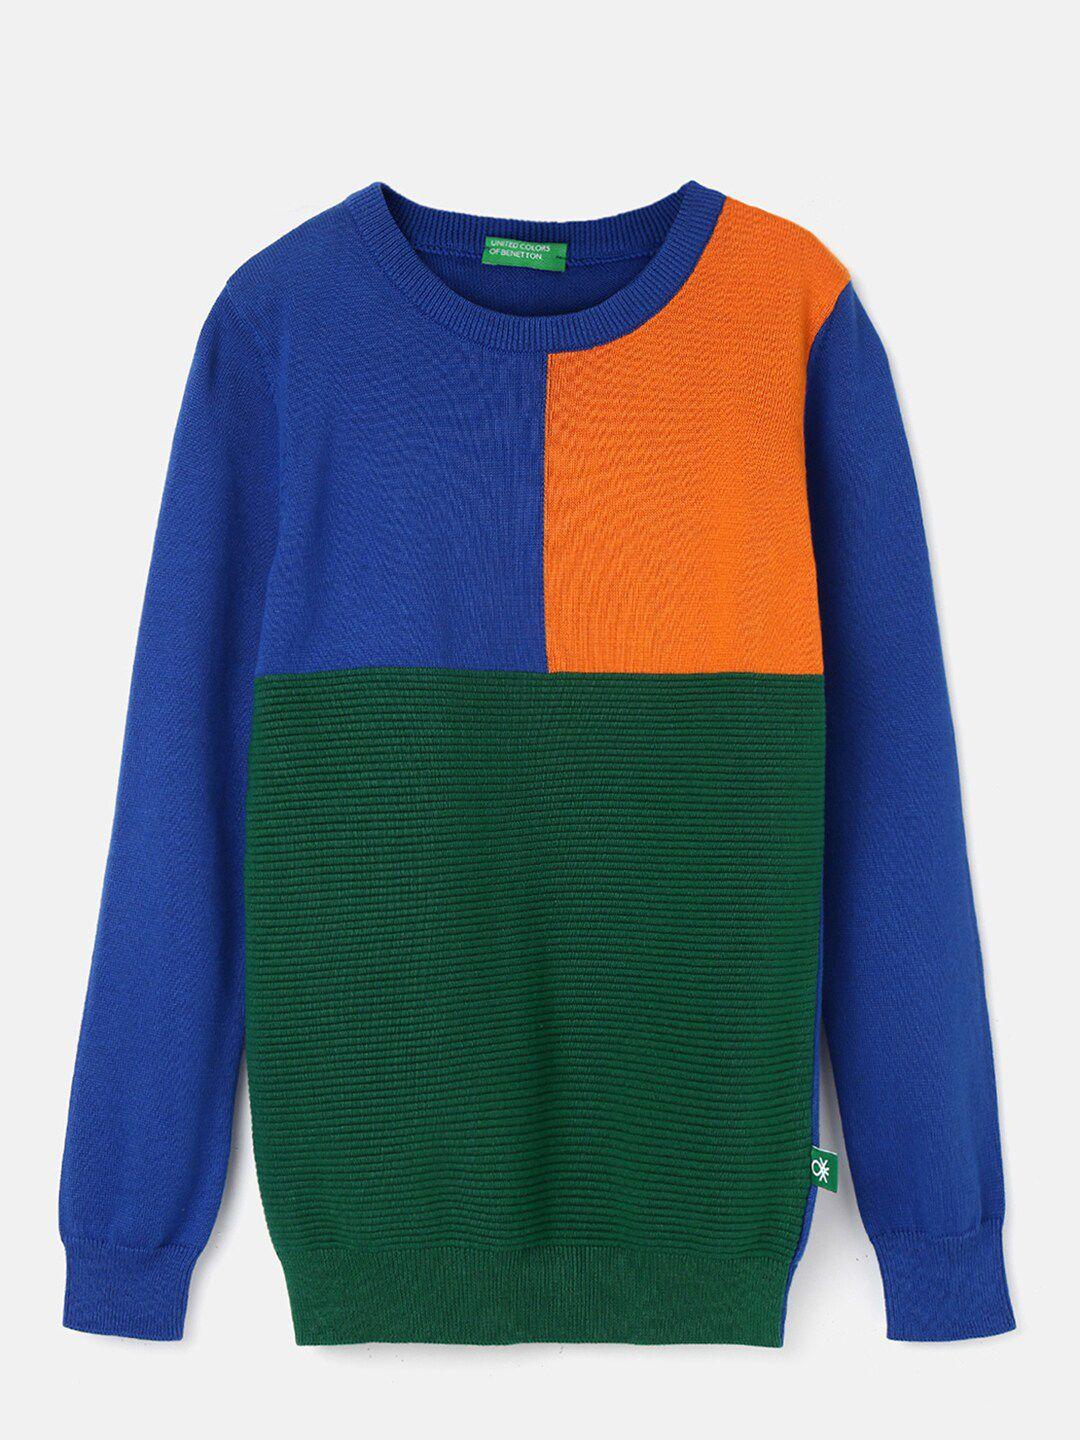 United Colors of Benetton Boys Colourblocked Cotton Pullover